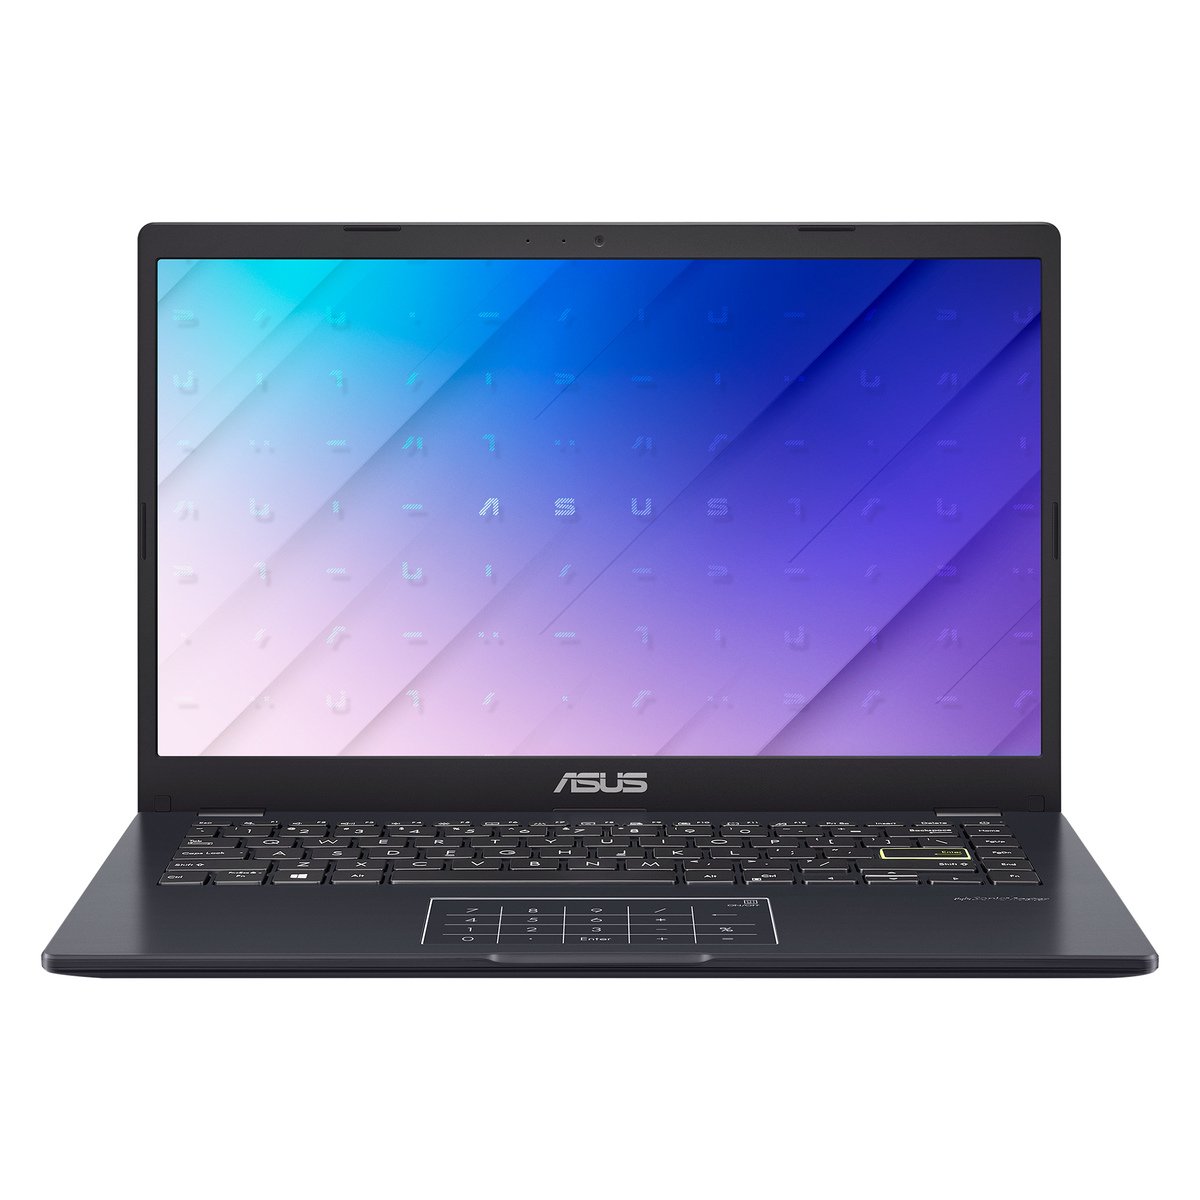 ASUS Laptop E410MA-EK005T Laptop, Intel Celeron N4020, 4GB RAM, 128GB(Storage), Intel UHD Graphics 600, Windows 10, Peacock Blue